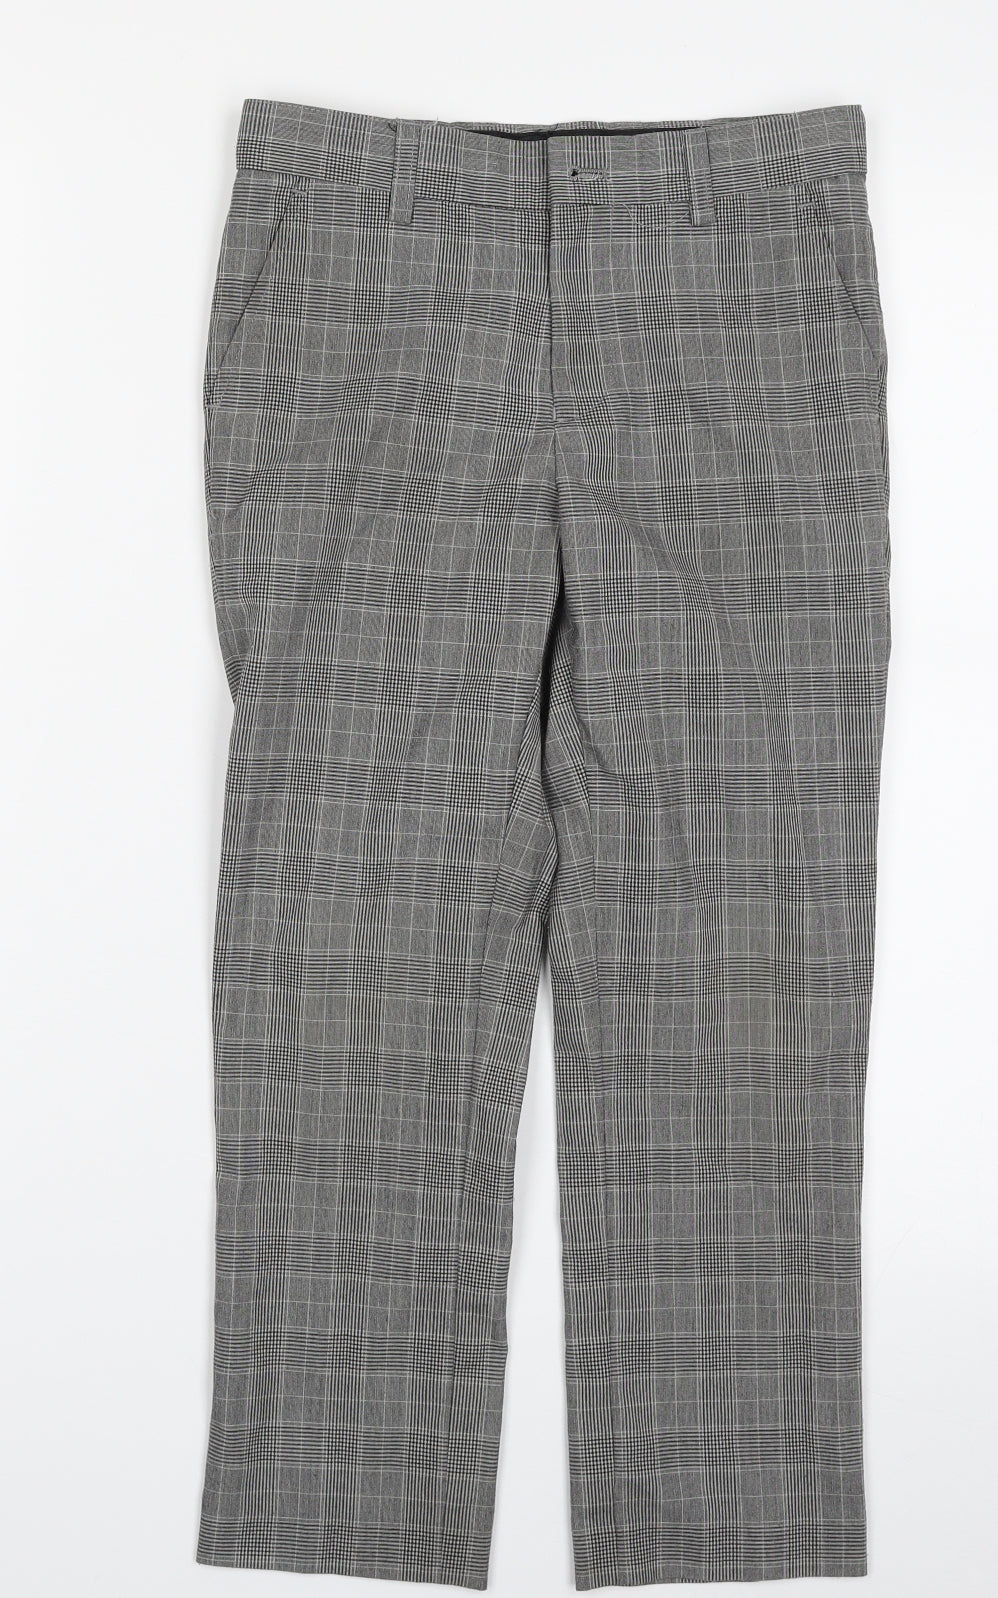 NEXT Boys Grey Plaid Polyester Dress Pants Trousers Size 9 Years  Regular Zip